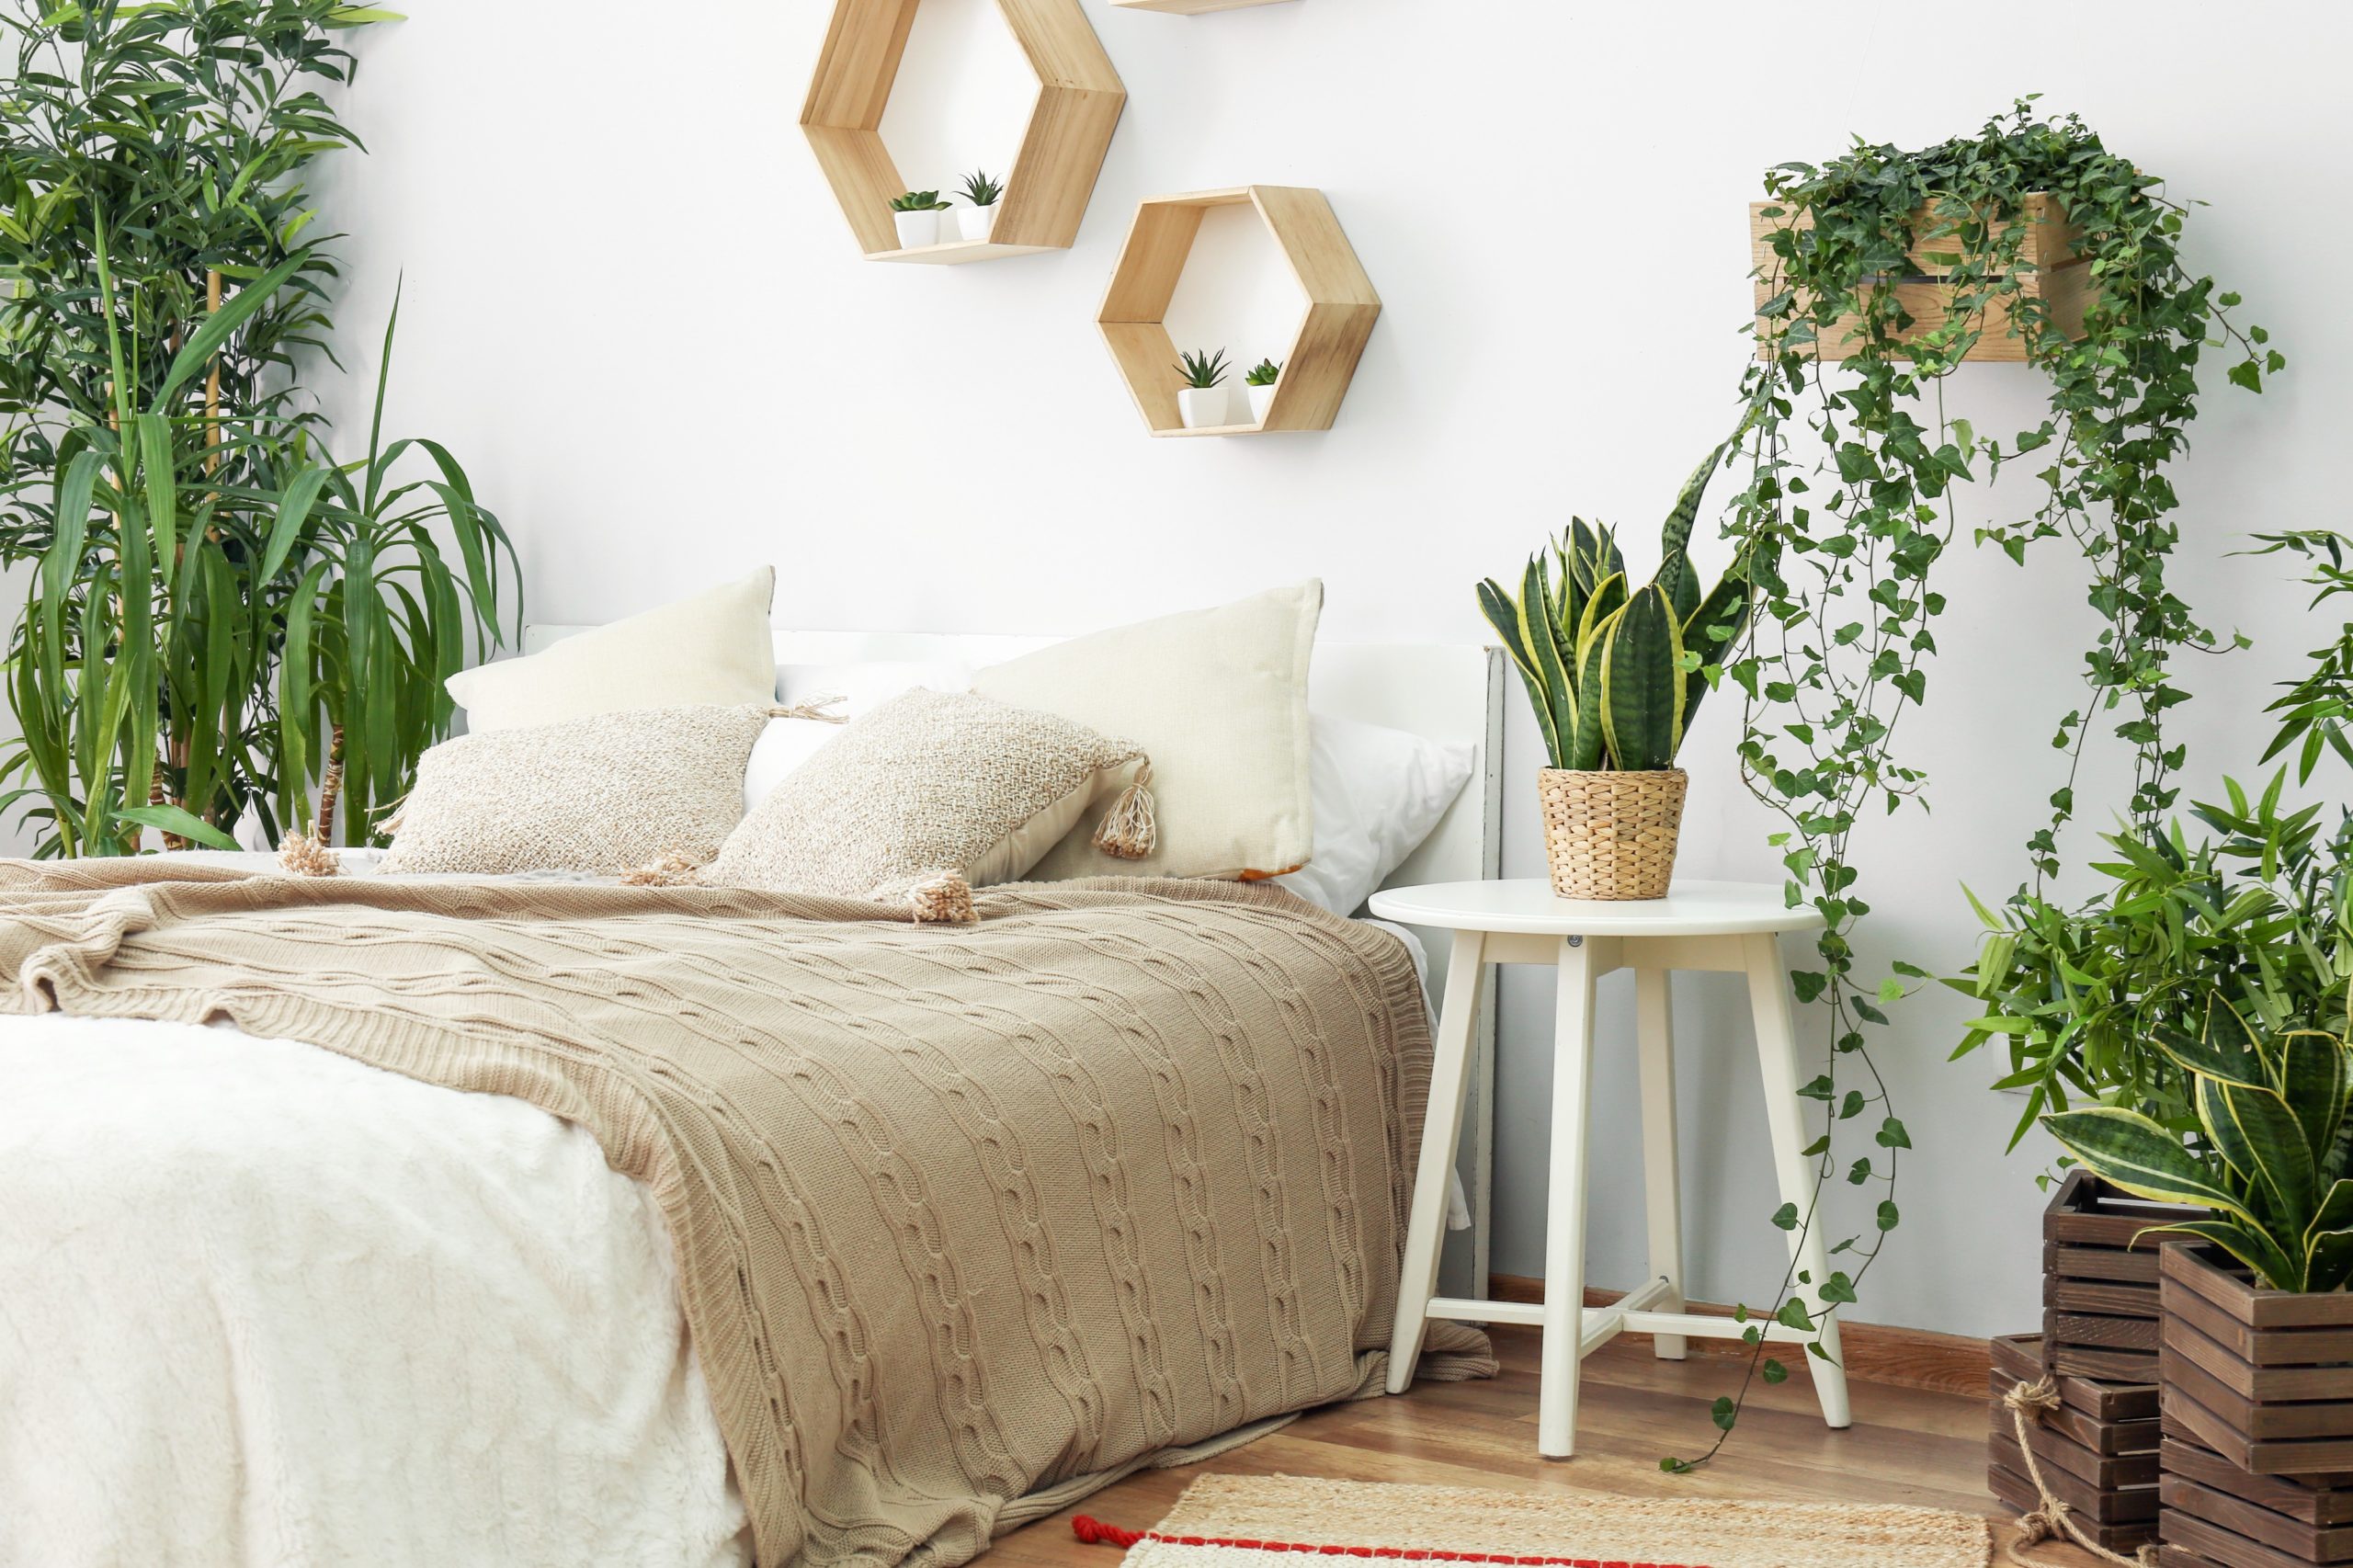 <img src="plant.jpg" alt="plant themed bedroom reflect personality"/> 